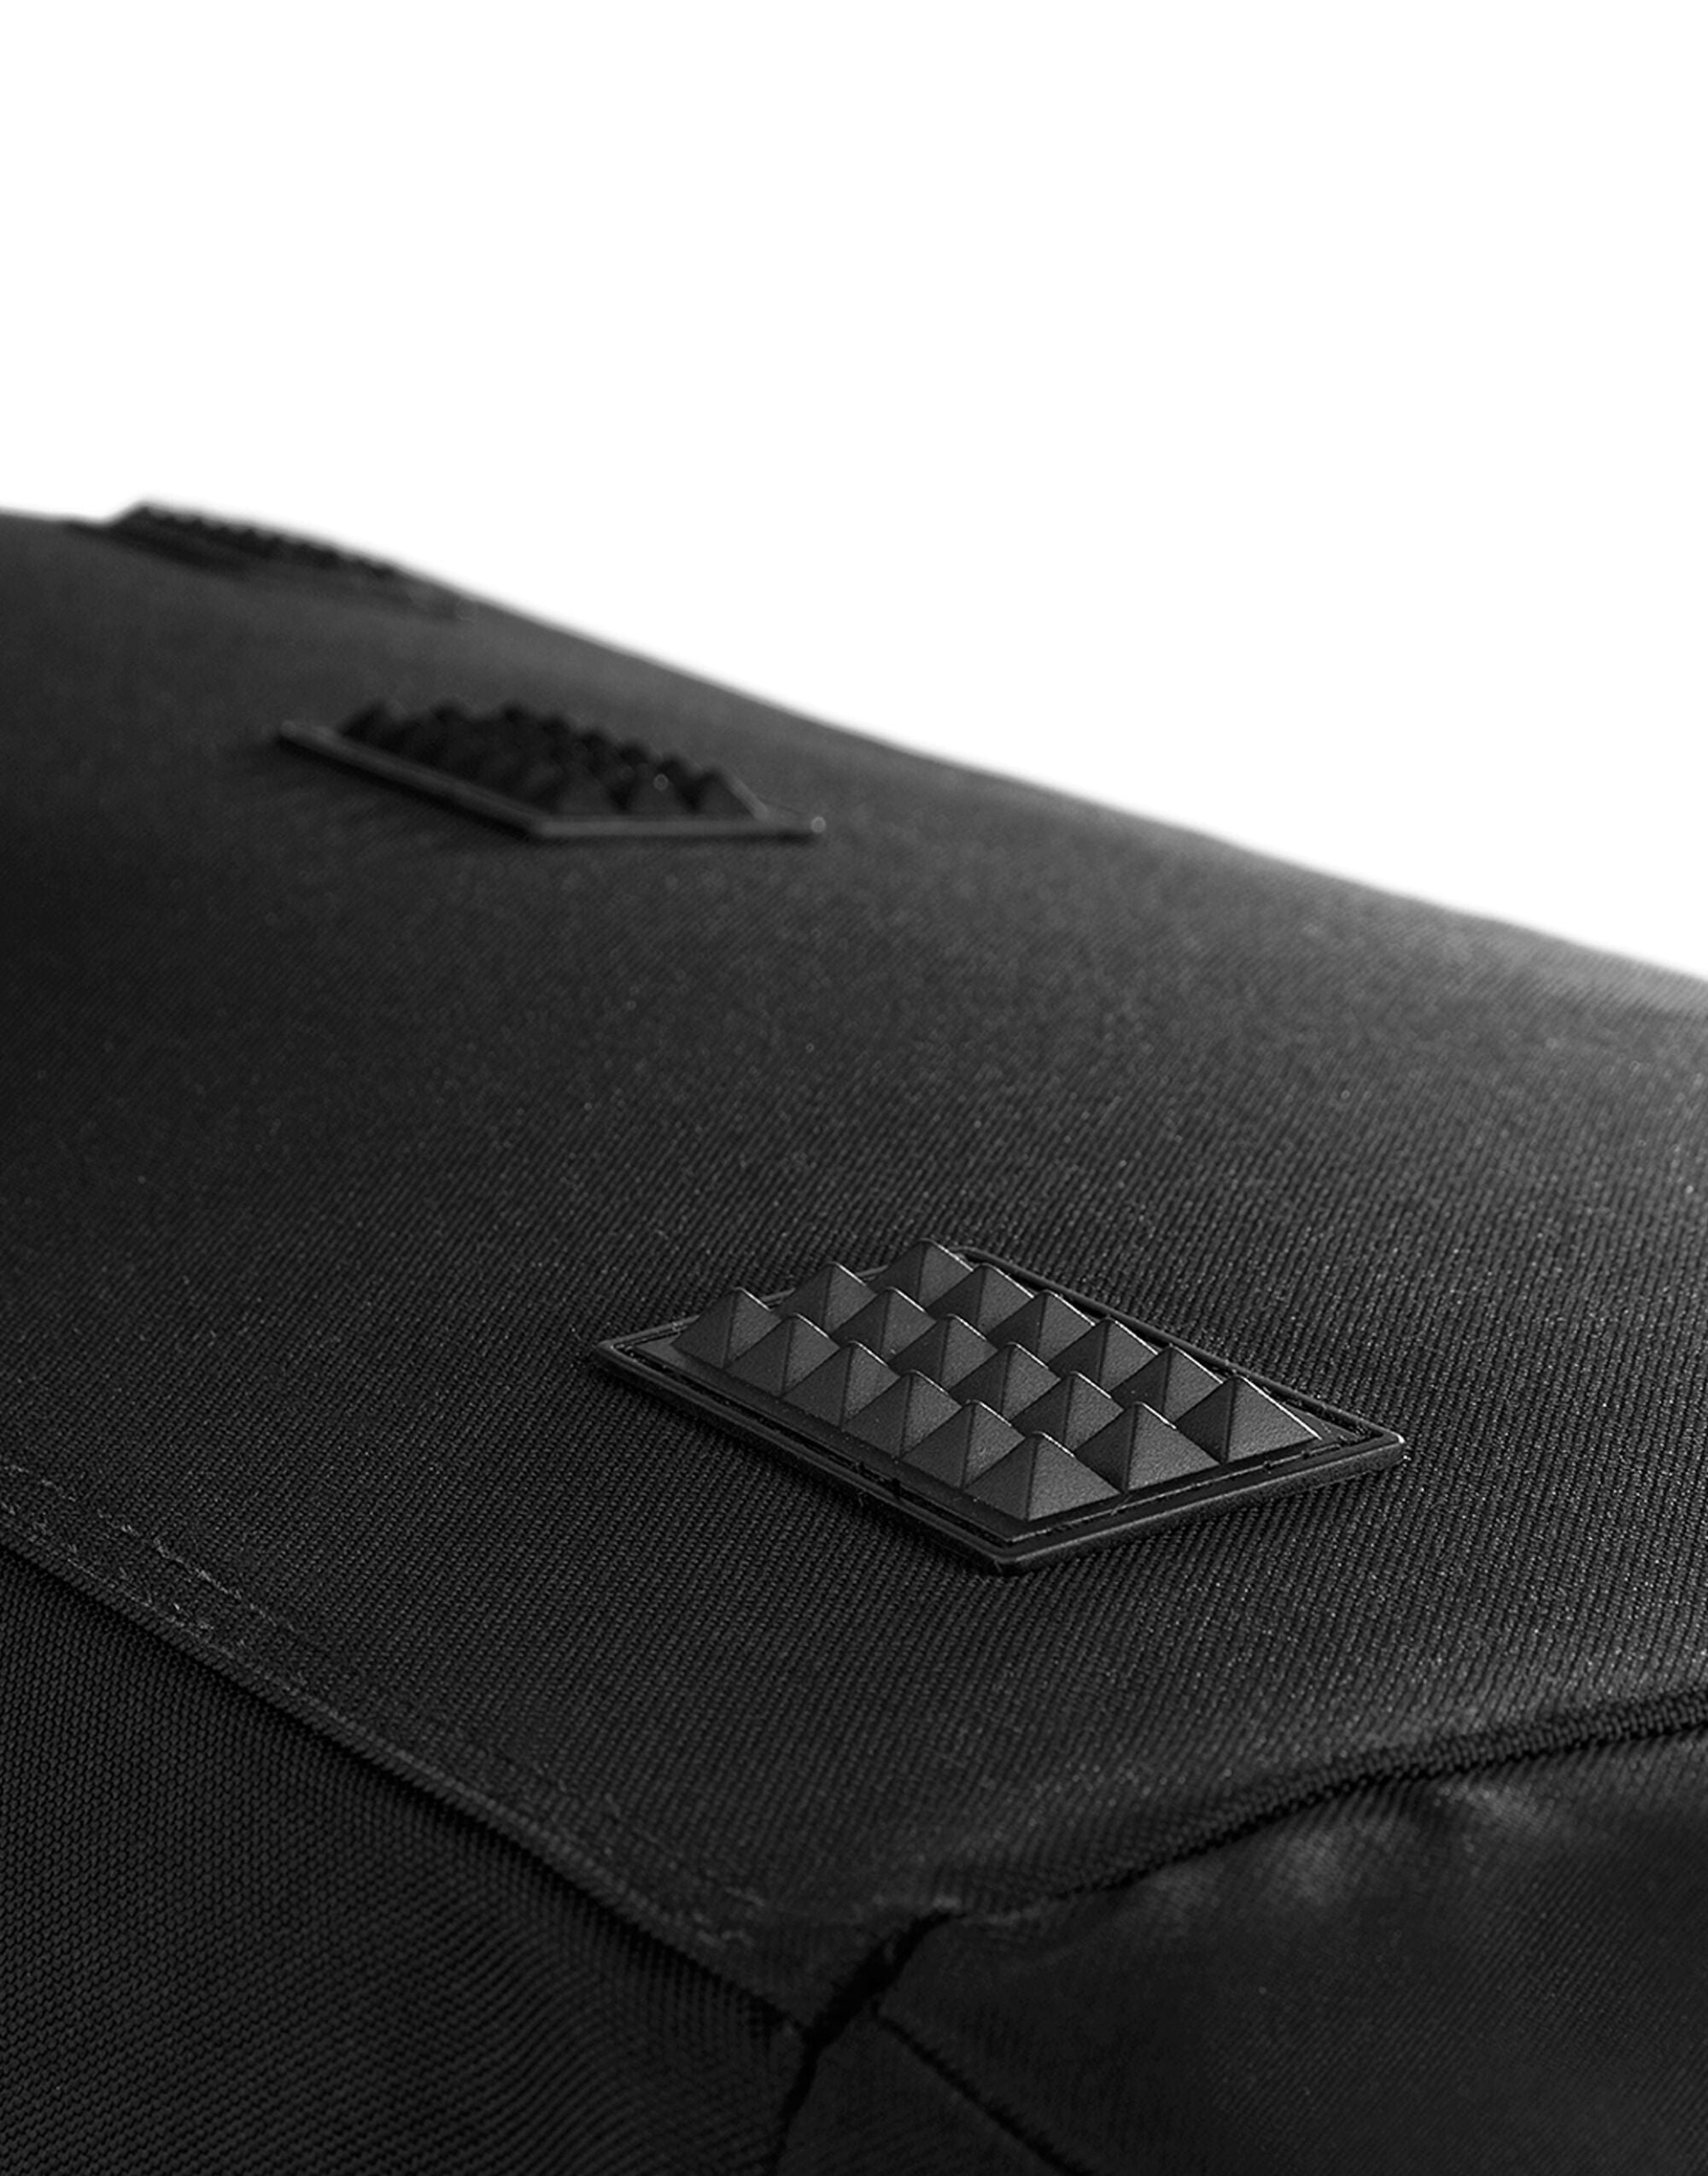 Quadra Teamwear Jumbo Kit Bag Detachable adjustable shoulder strap with pad (QS88)